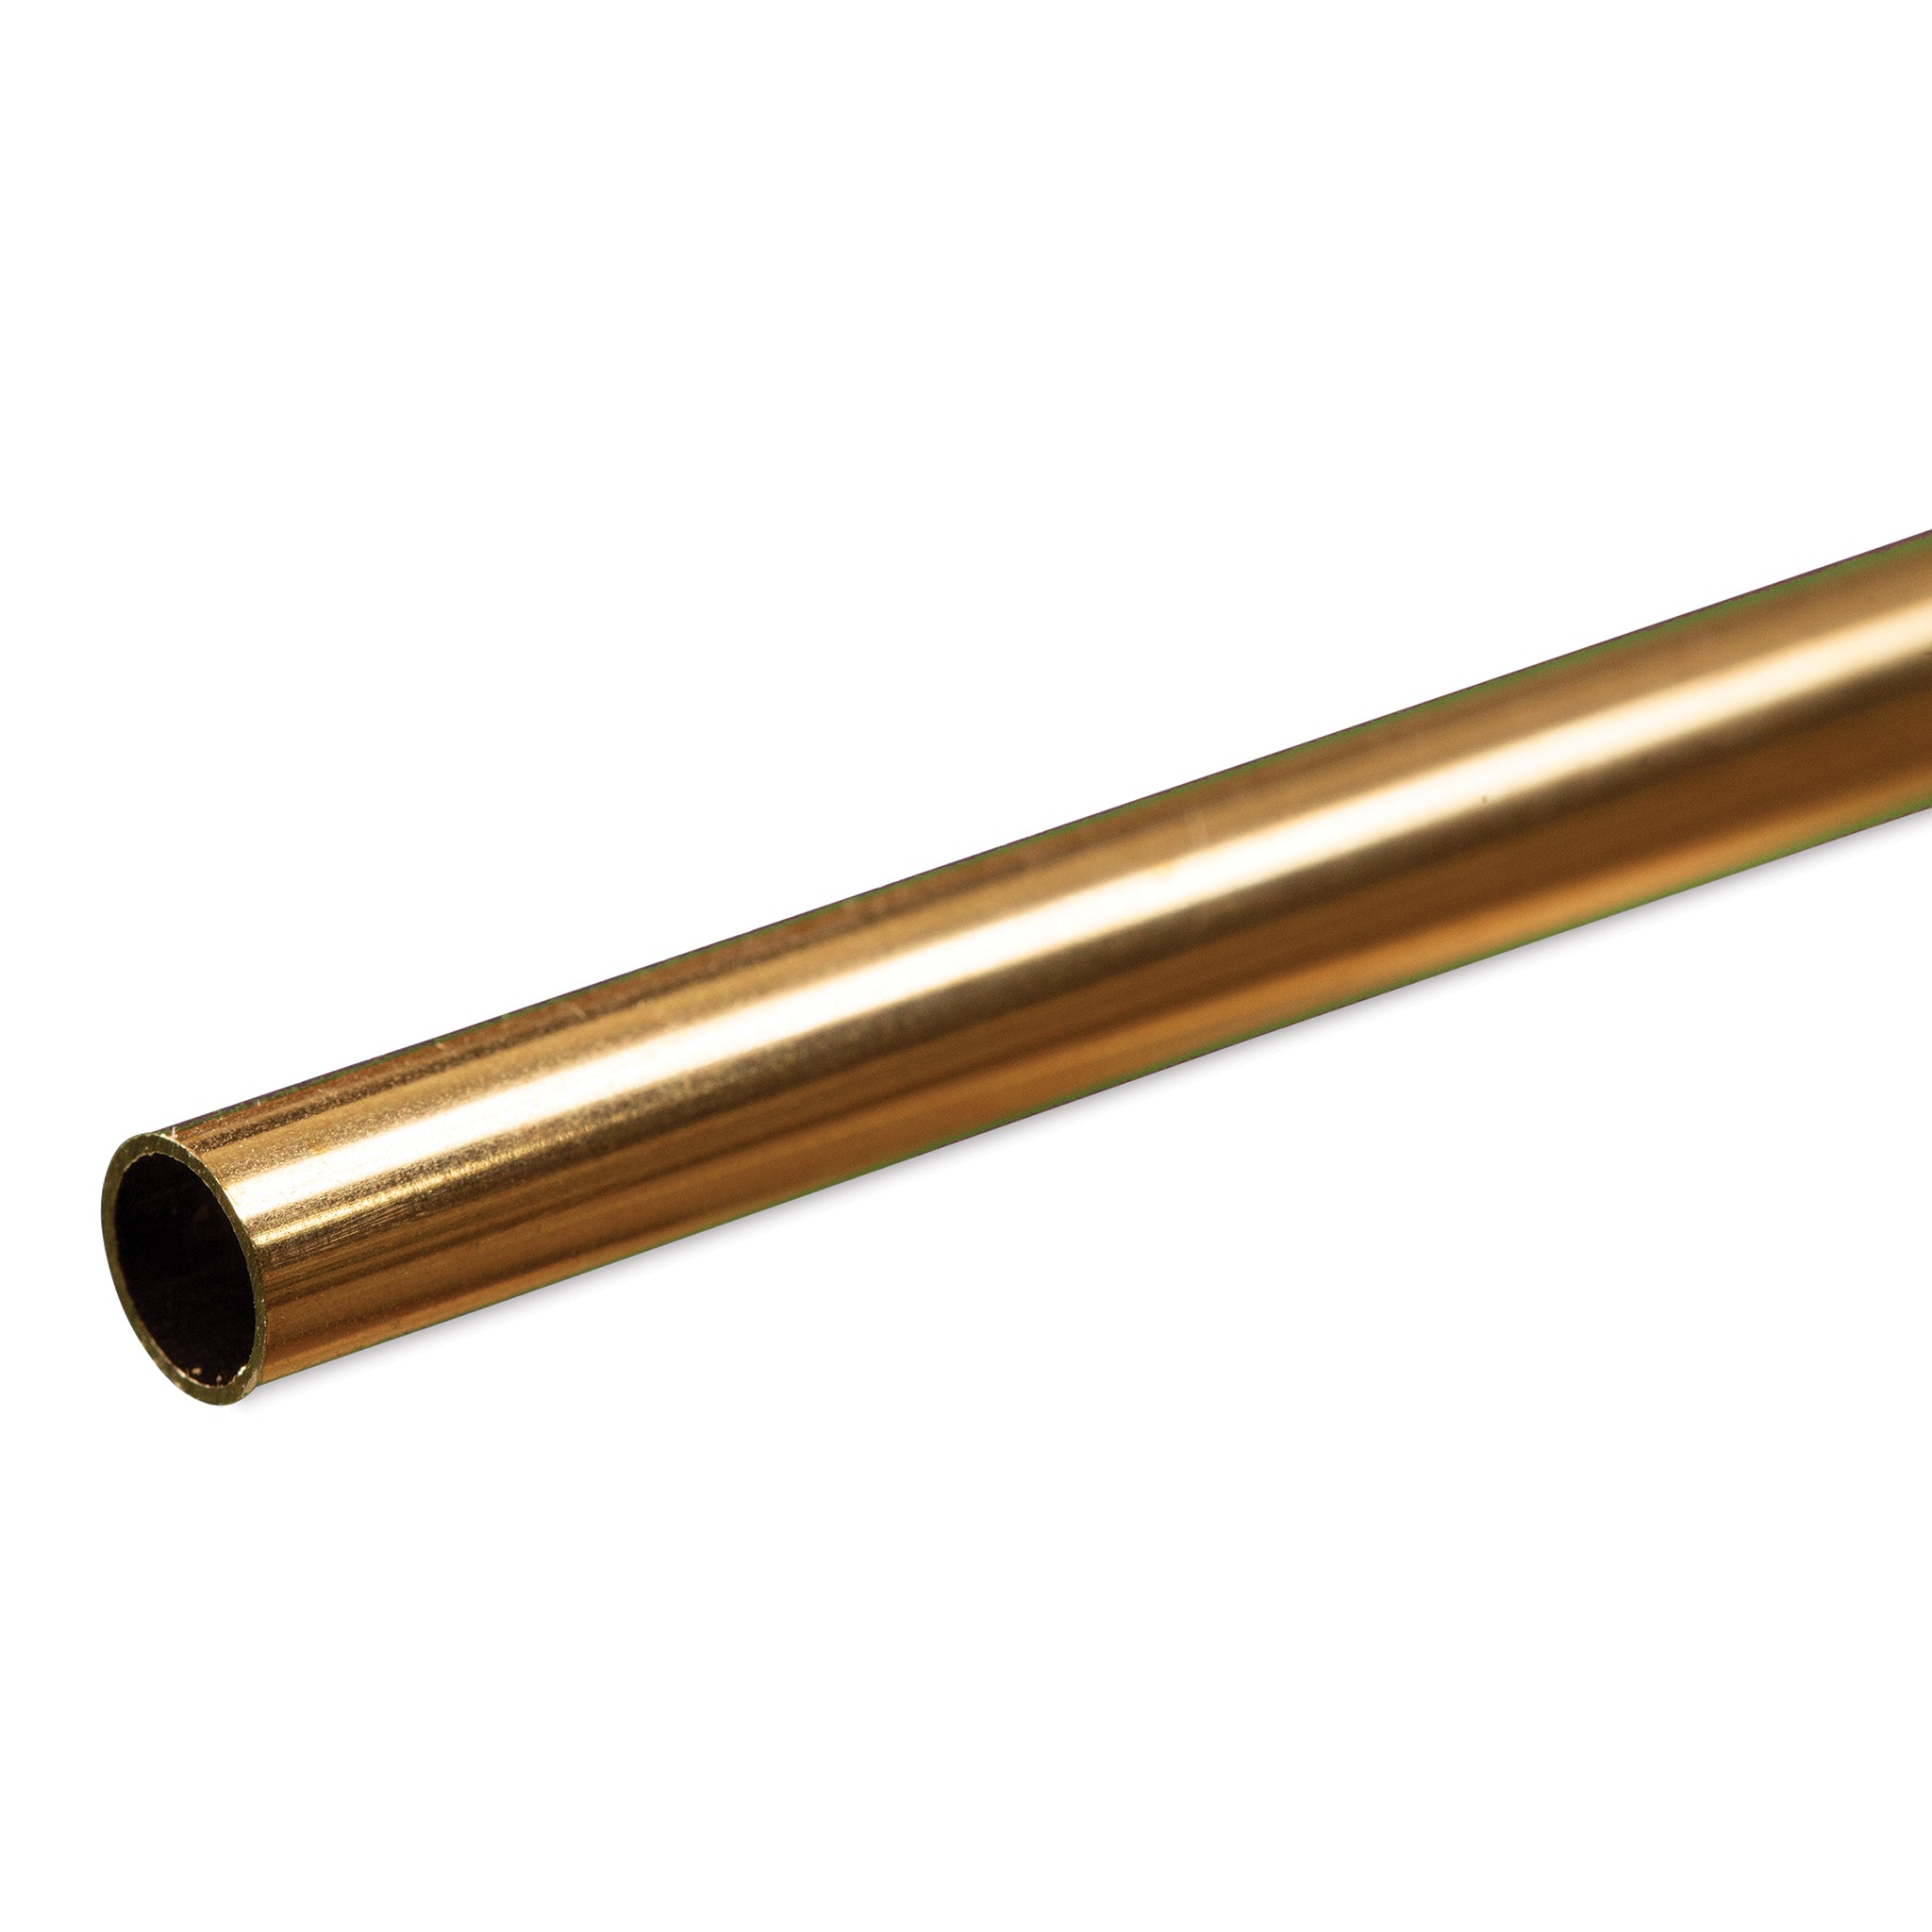 K&S Metals 8130 Round Brass Tube 7/32" OD x 0.014" Wall x 12" Long (1 Piece)